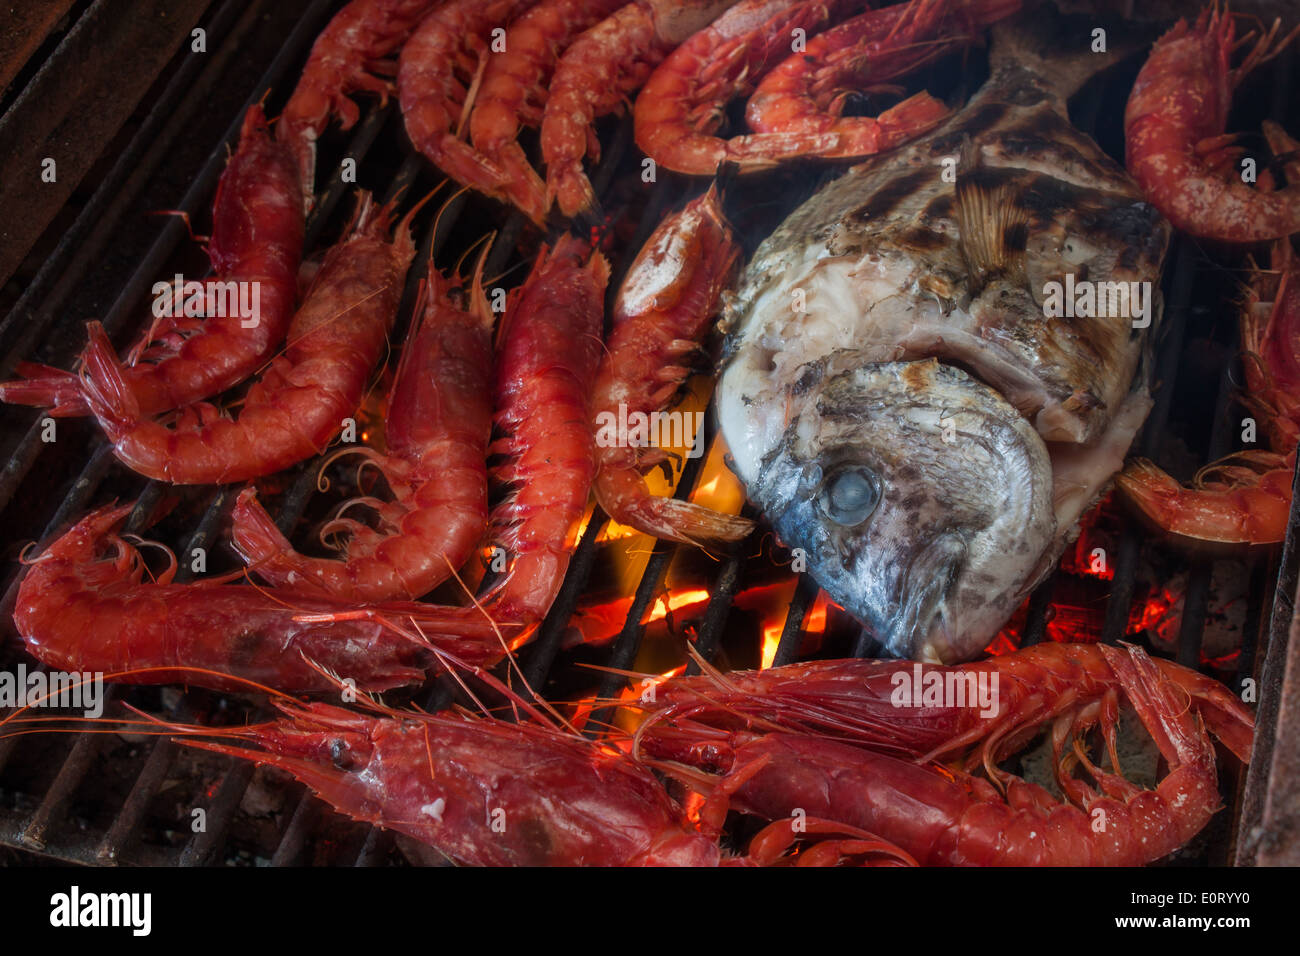 Krabben Muscheln kochen Flamme Meeresfrüchte Grill Grill Closeup Fisch "Dorade" Kohle Feuer niemand Rauch Stockfoto